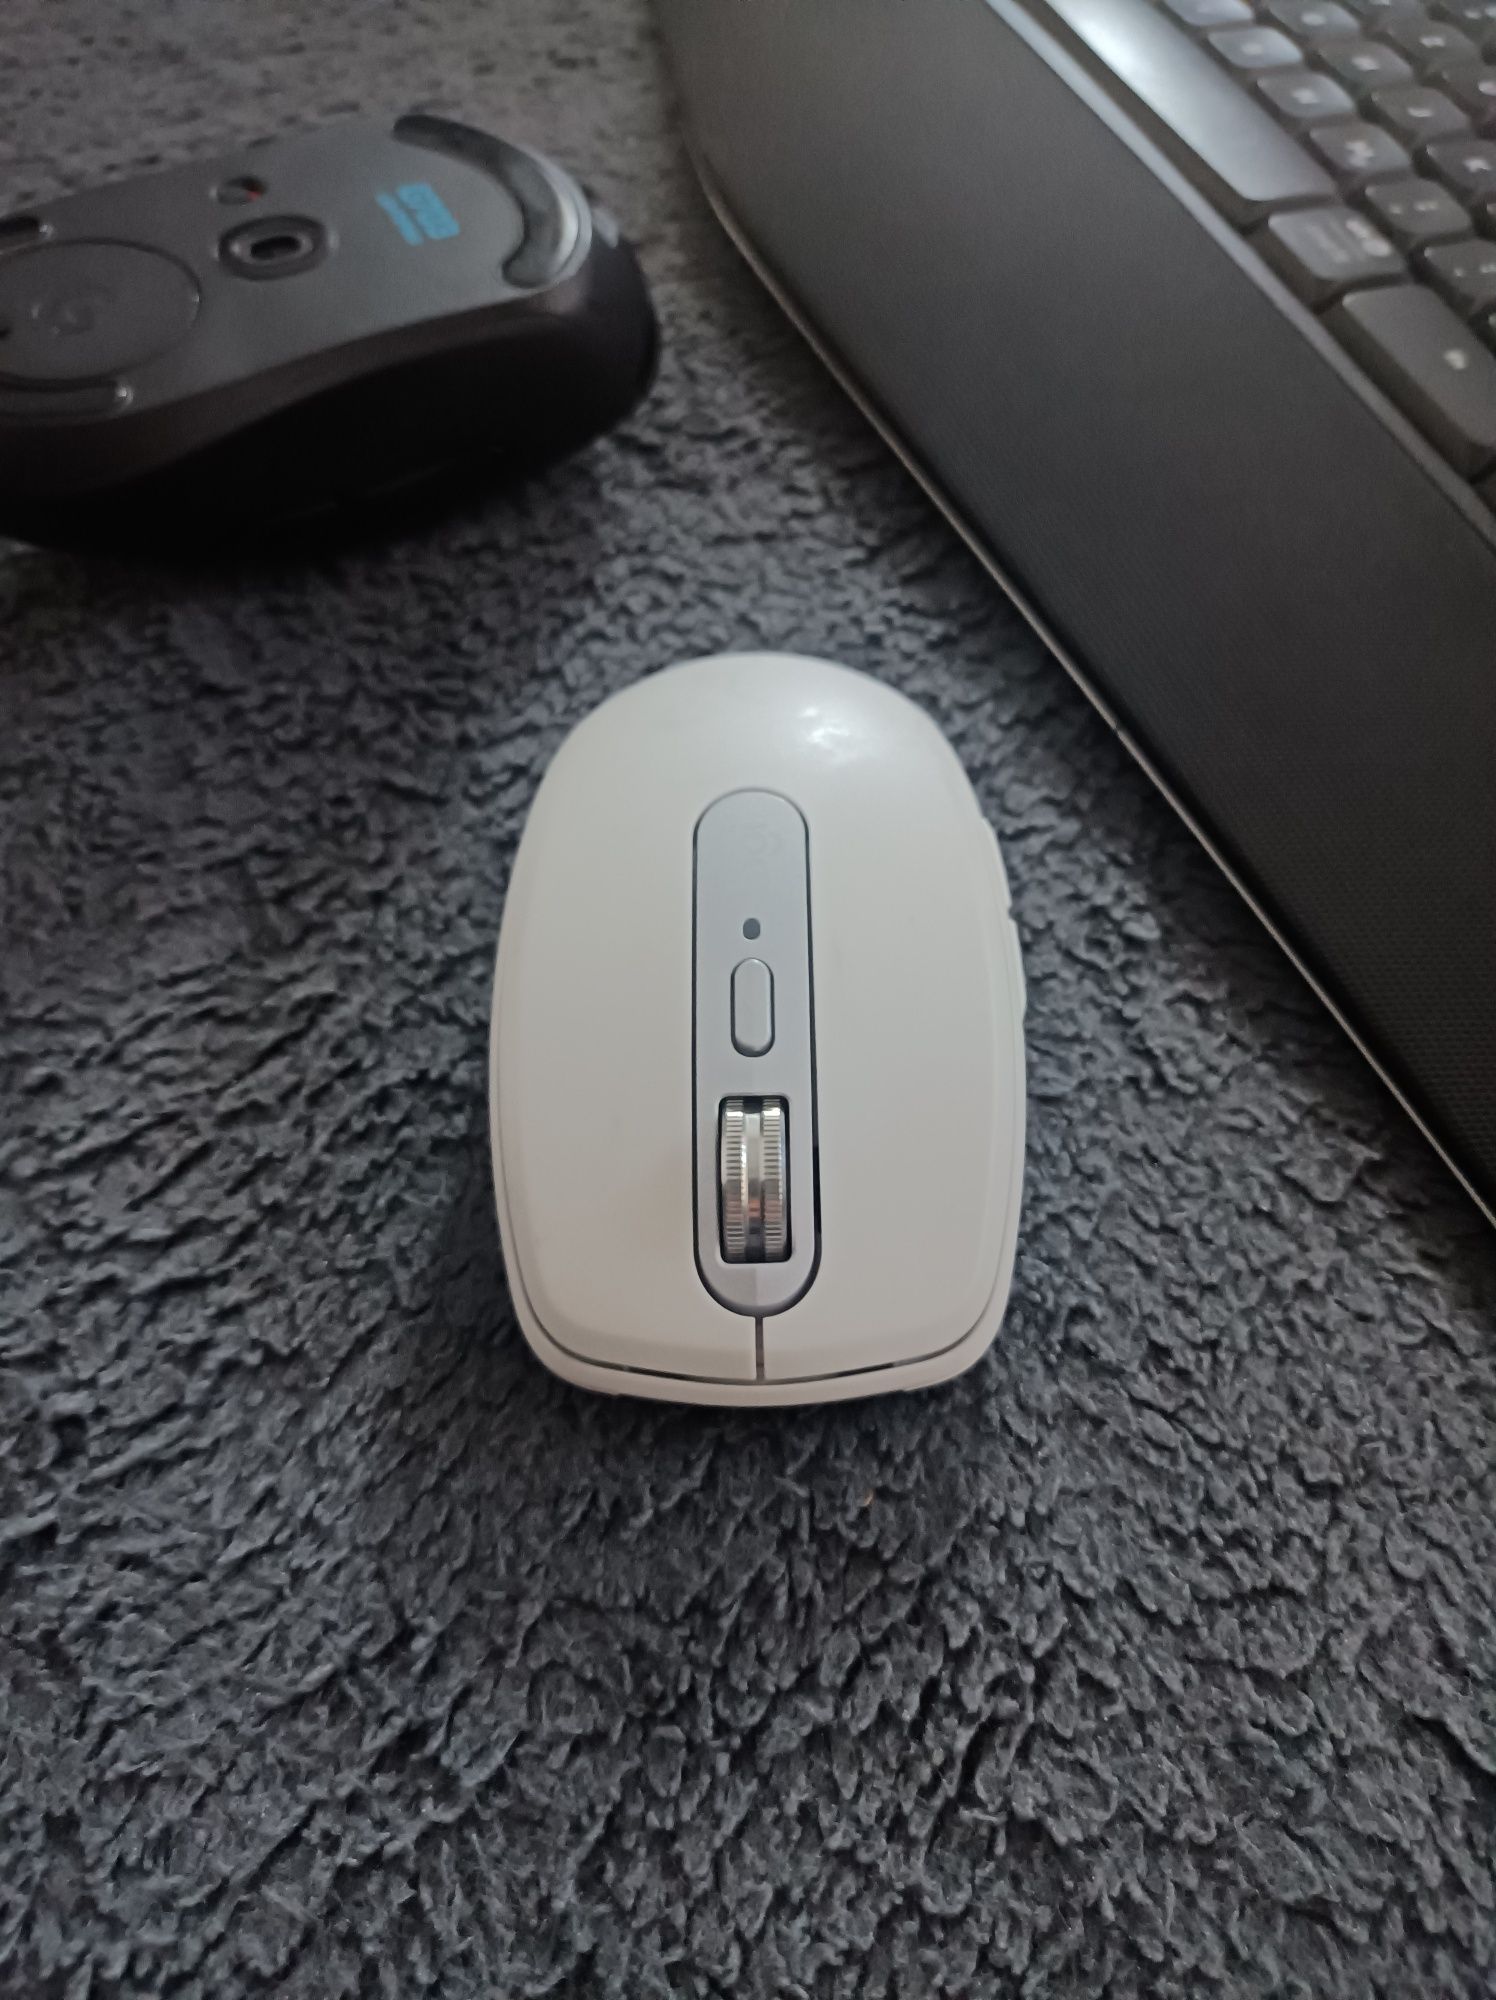 Mouse Logitech G 703 , MX Anywhere 3 , K 850